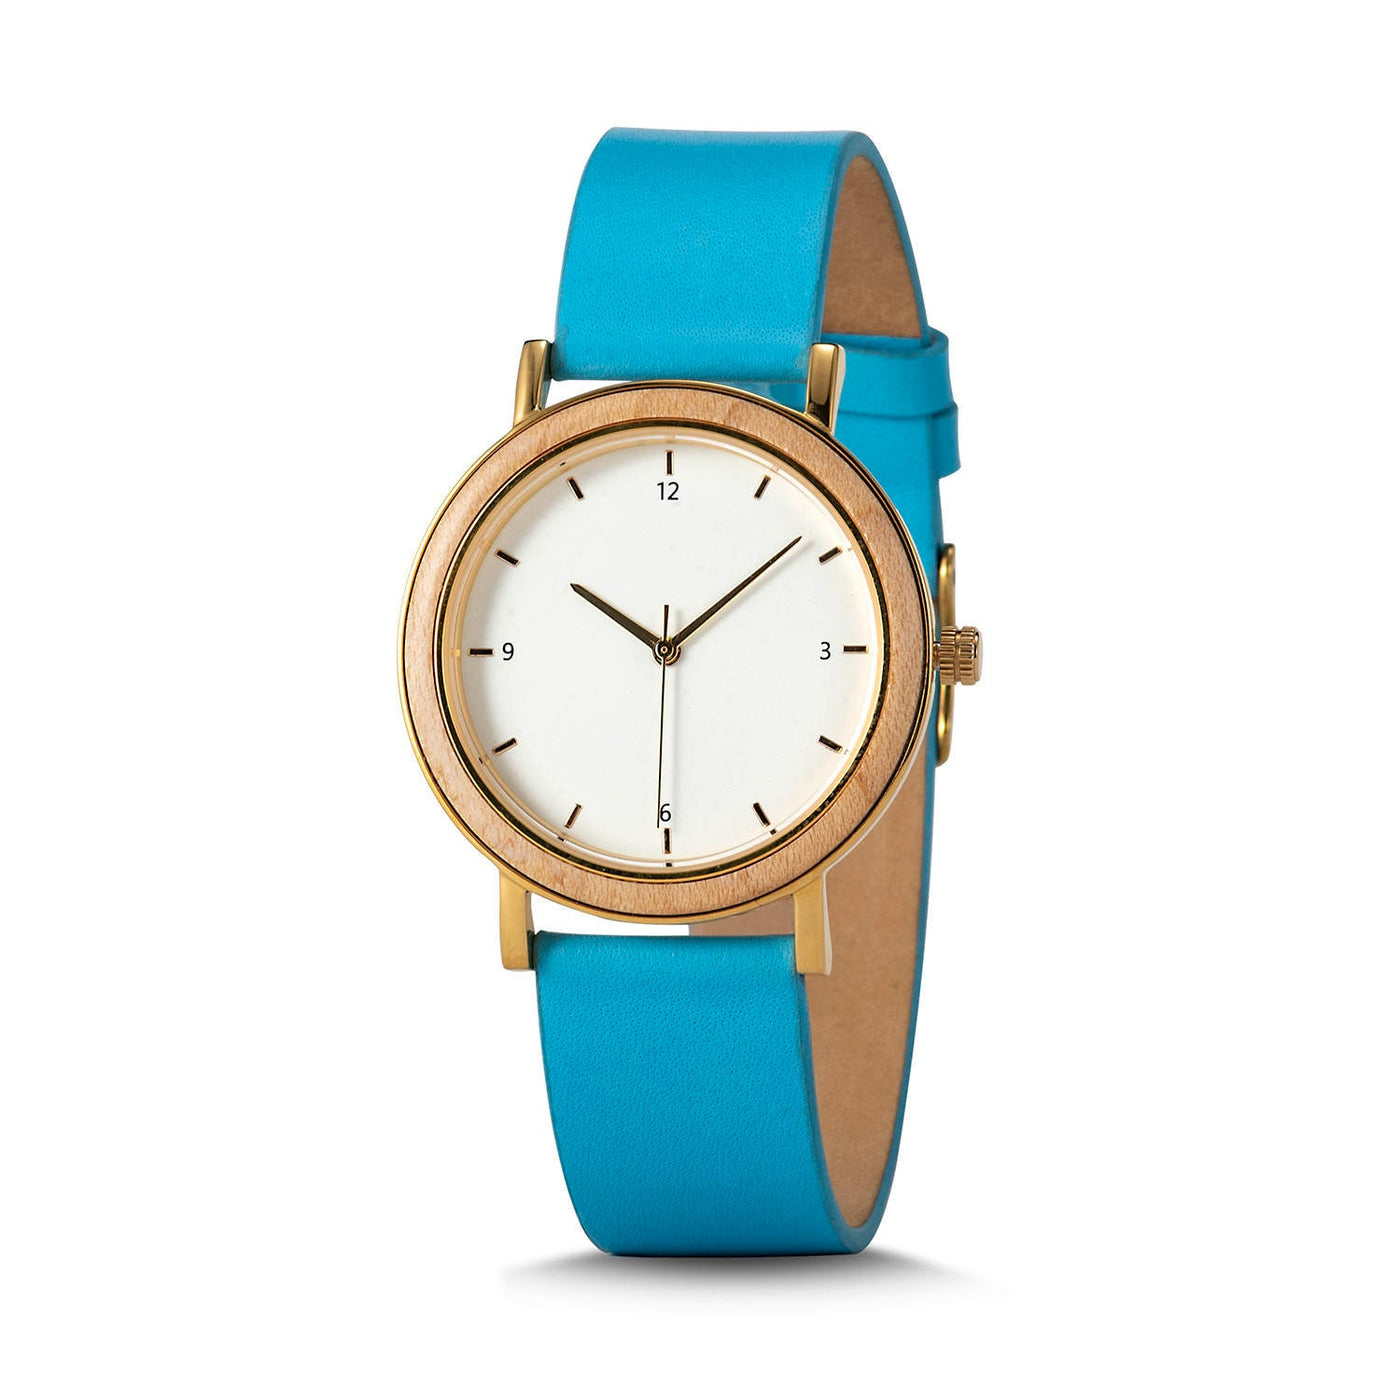 Womens Watch, Wood Watch, Engraved watch for women, Wooden Watch, best friend gift, anniversary gift for wife, Anniversary gift girlfriend